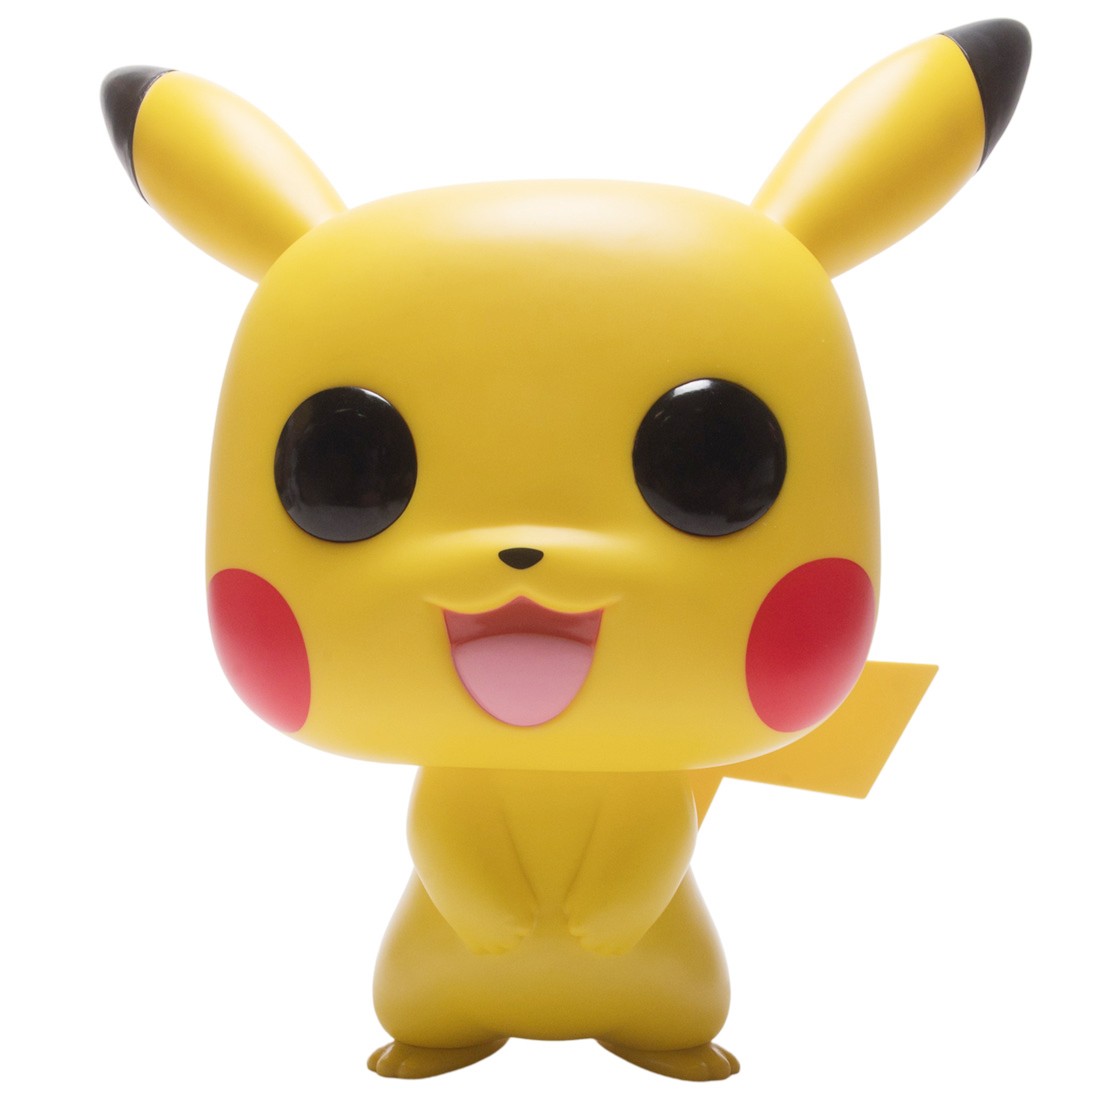 Meget sur Joseph Banks afsked funko pop games pokemon 18 inch pikachu yellow